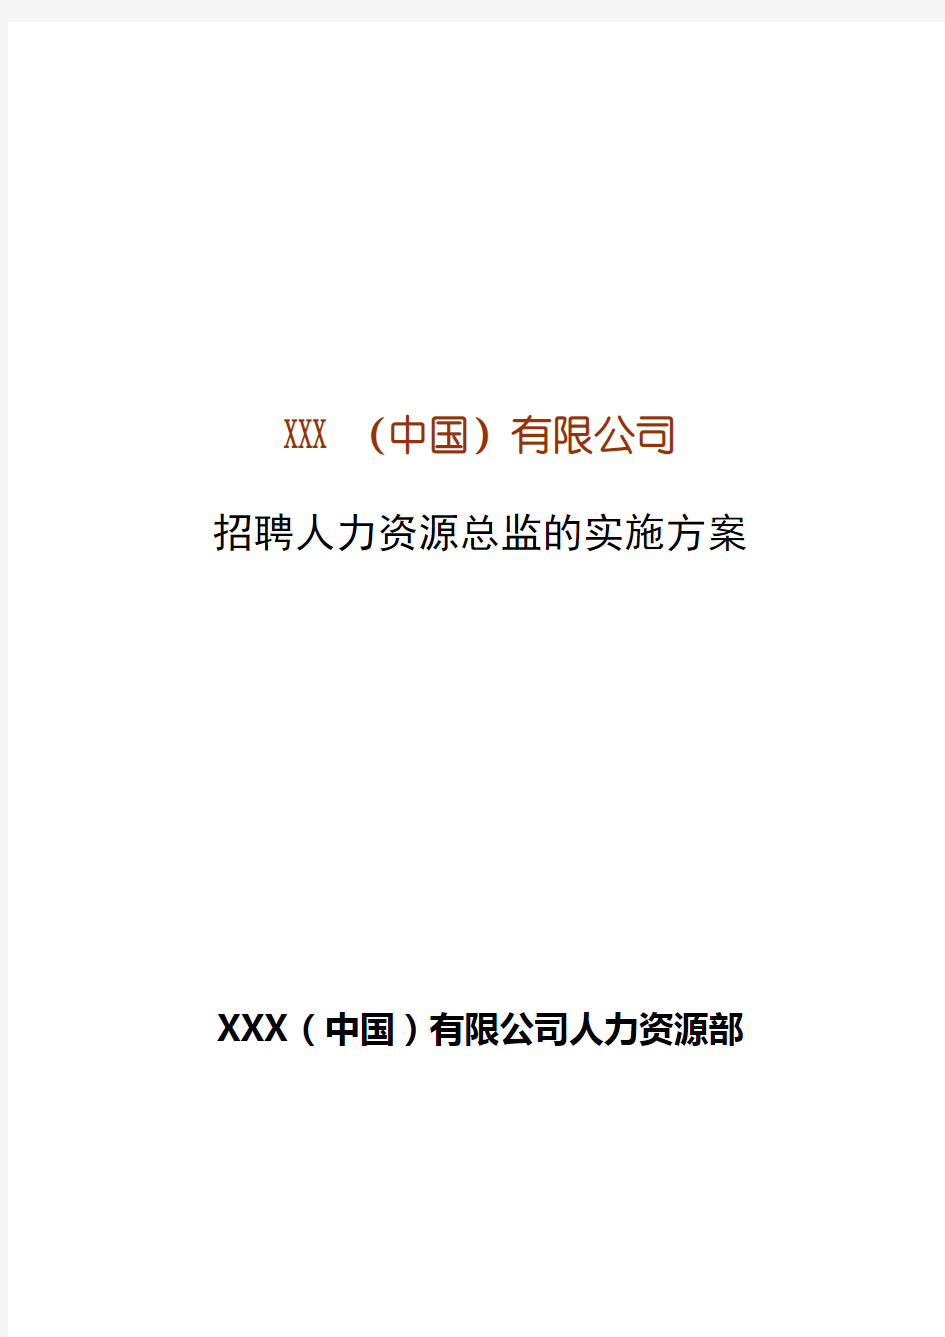 XXX(中国)有限公司人力资源总监招聘实施方案